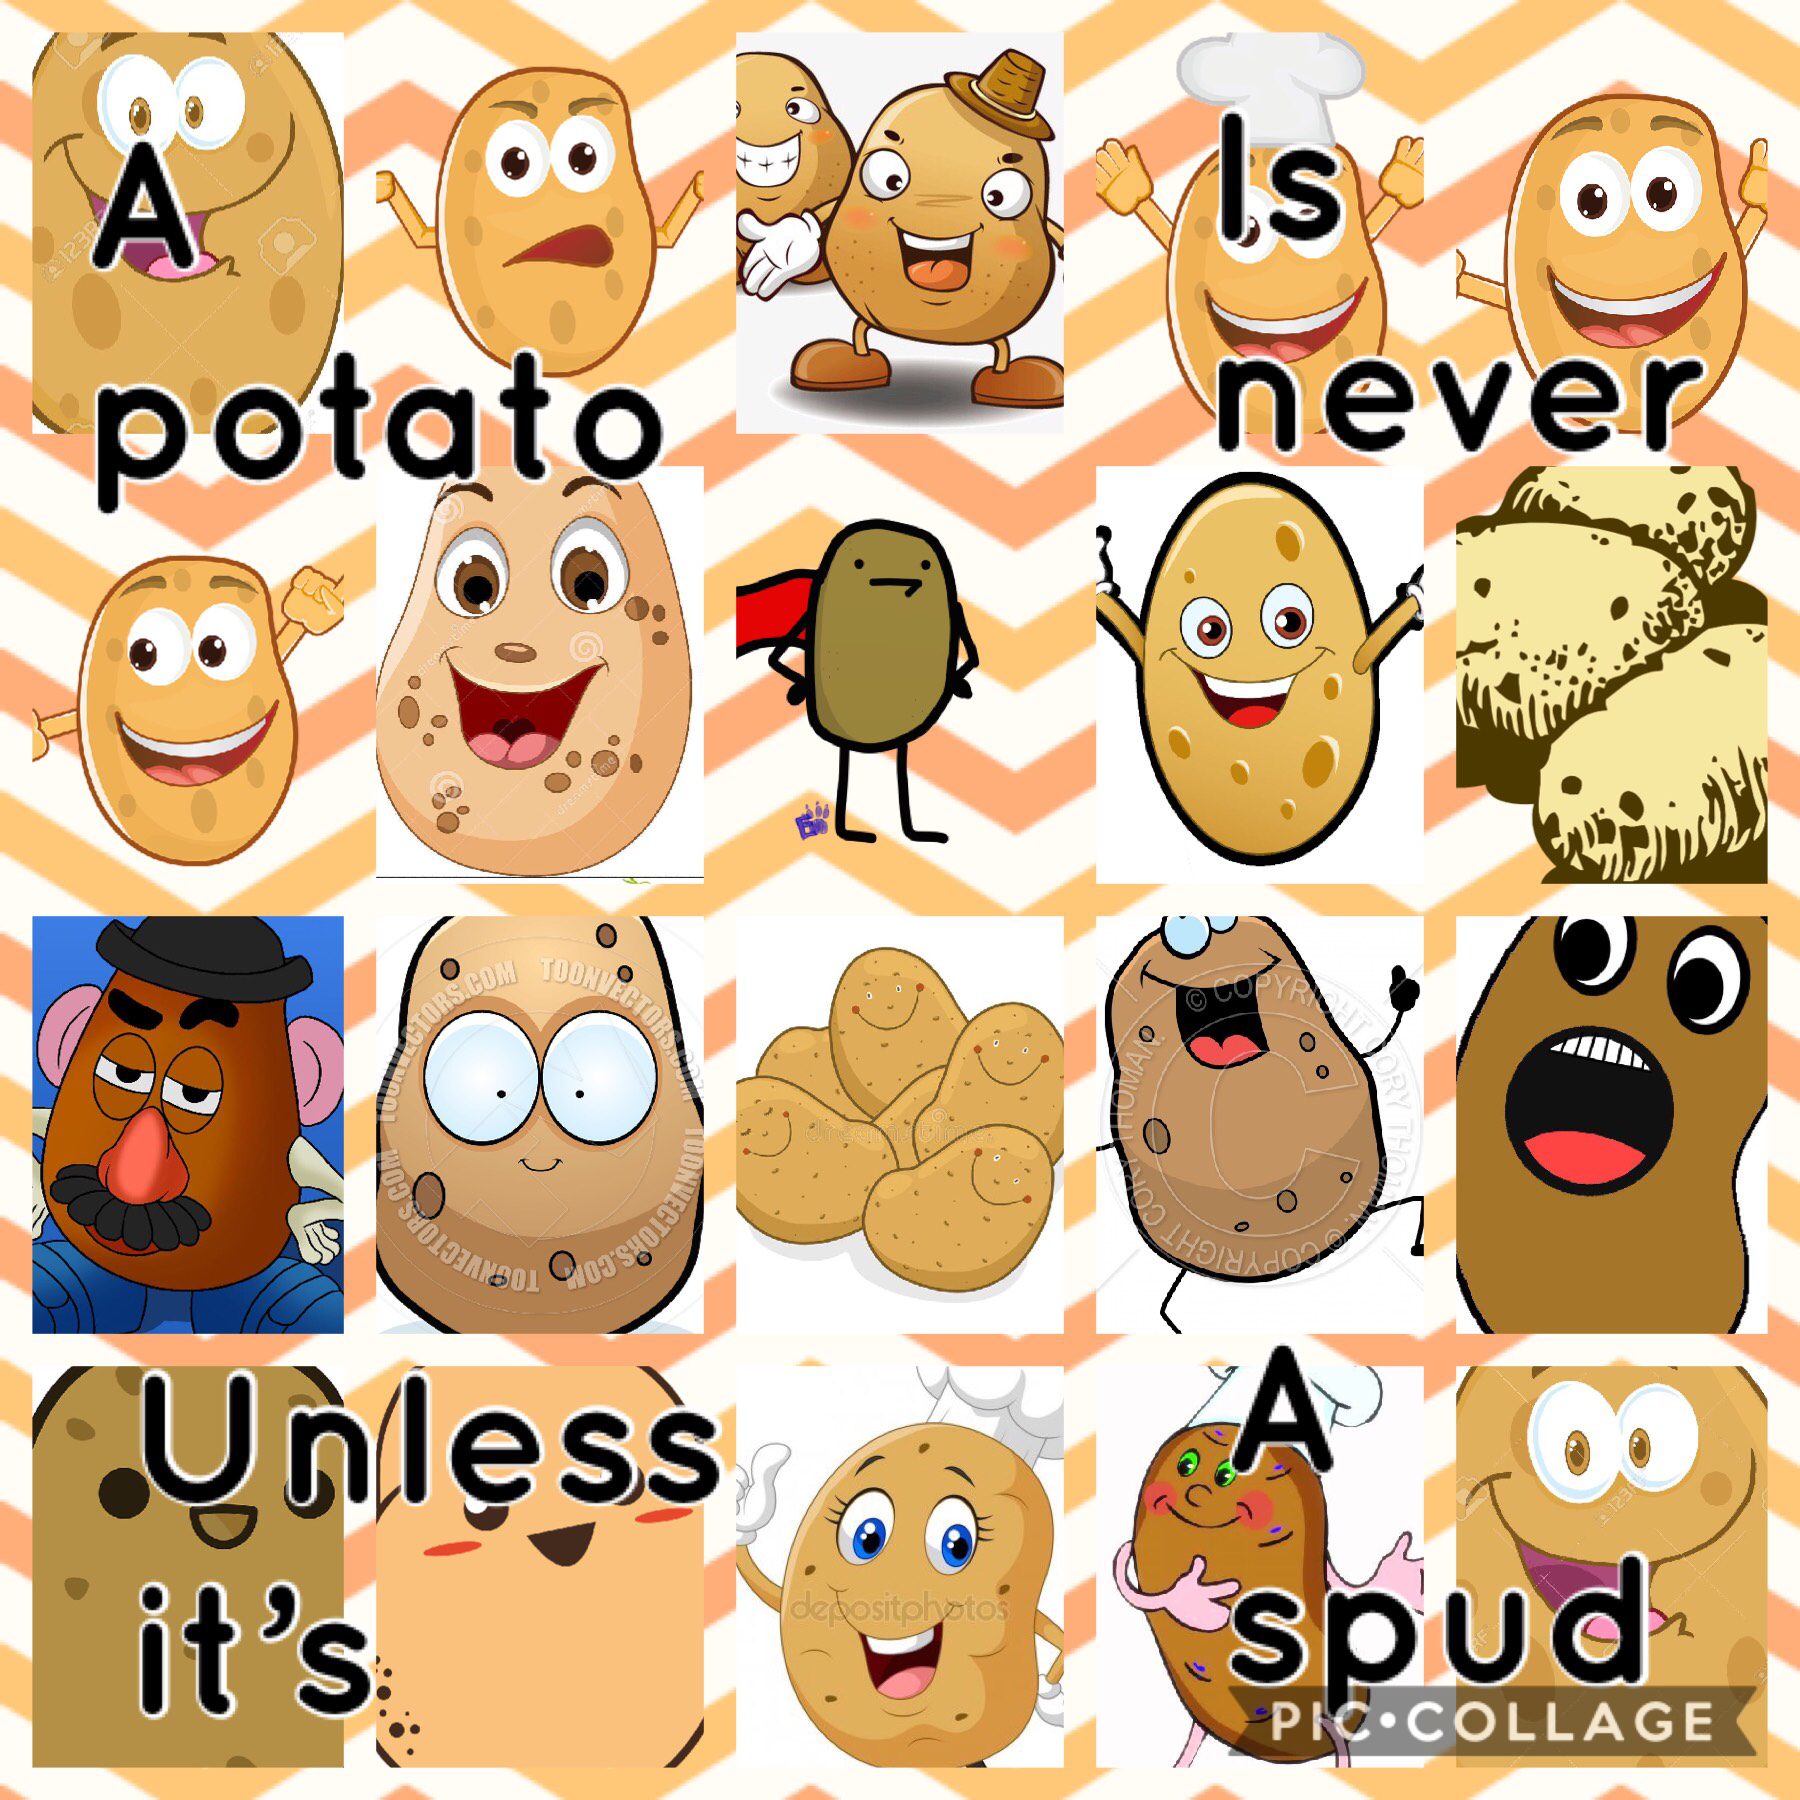 A potato is never unless it’s a SPUD